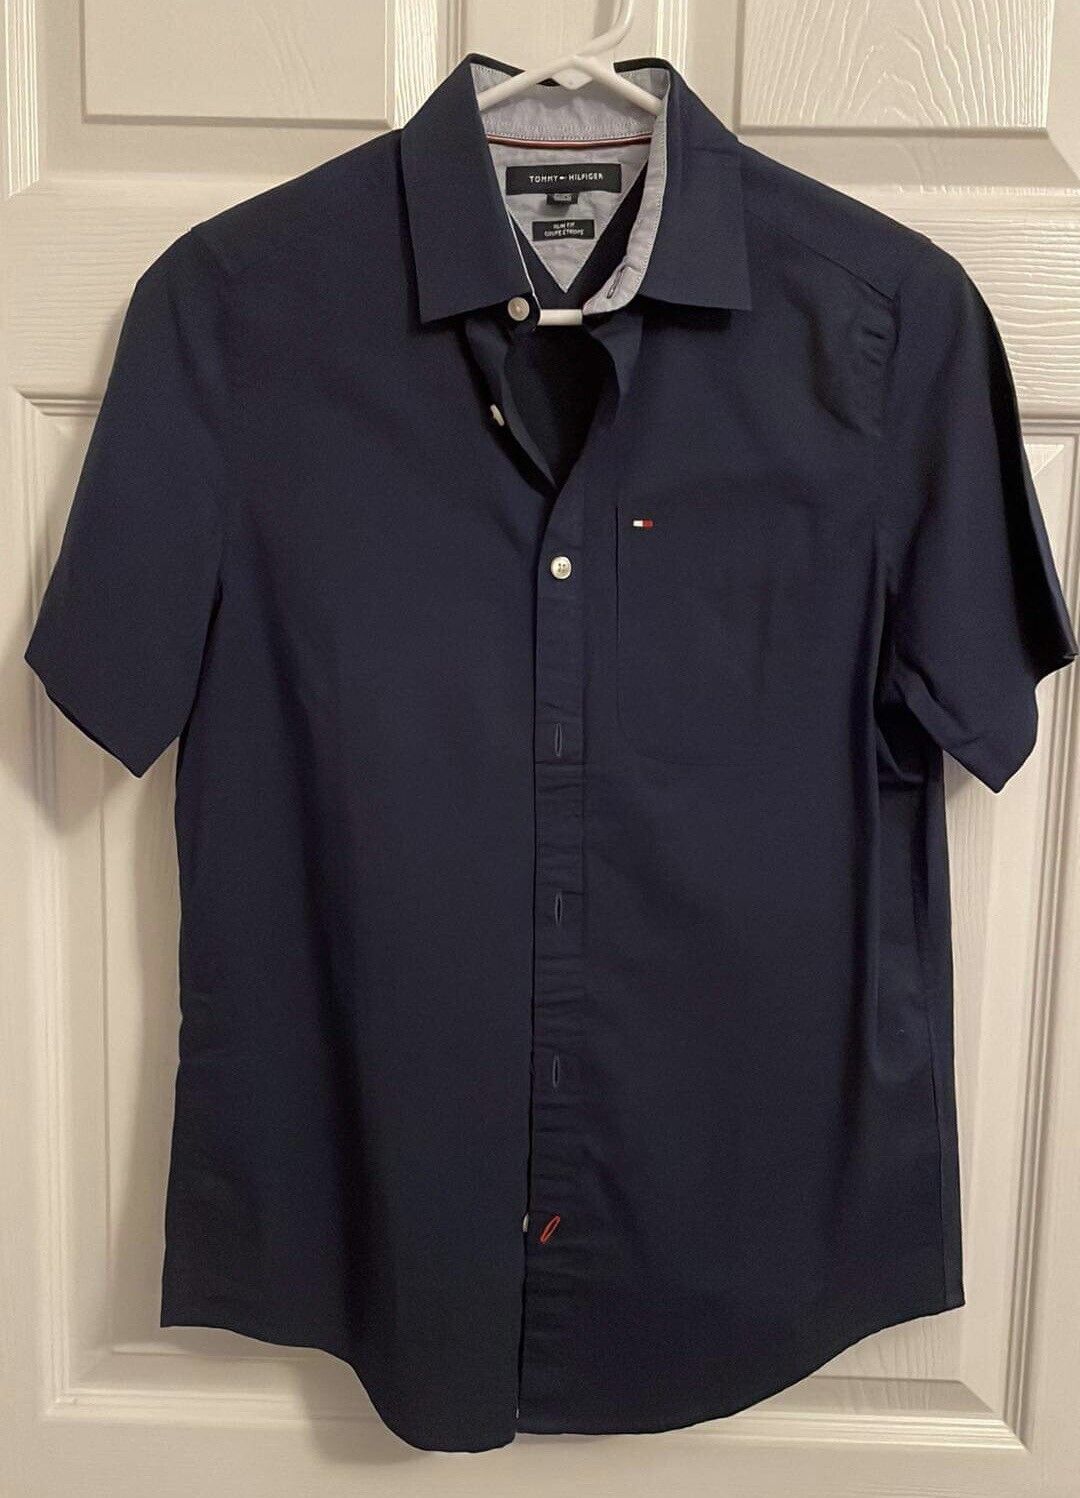 Tommy Hilfiger Short Sleeve Button Up Navy Blue Shirt Mens XS